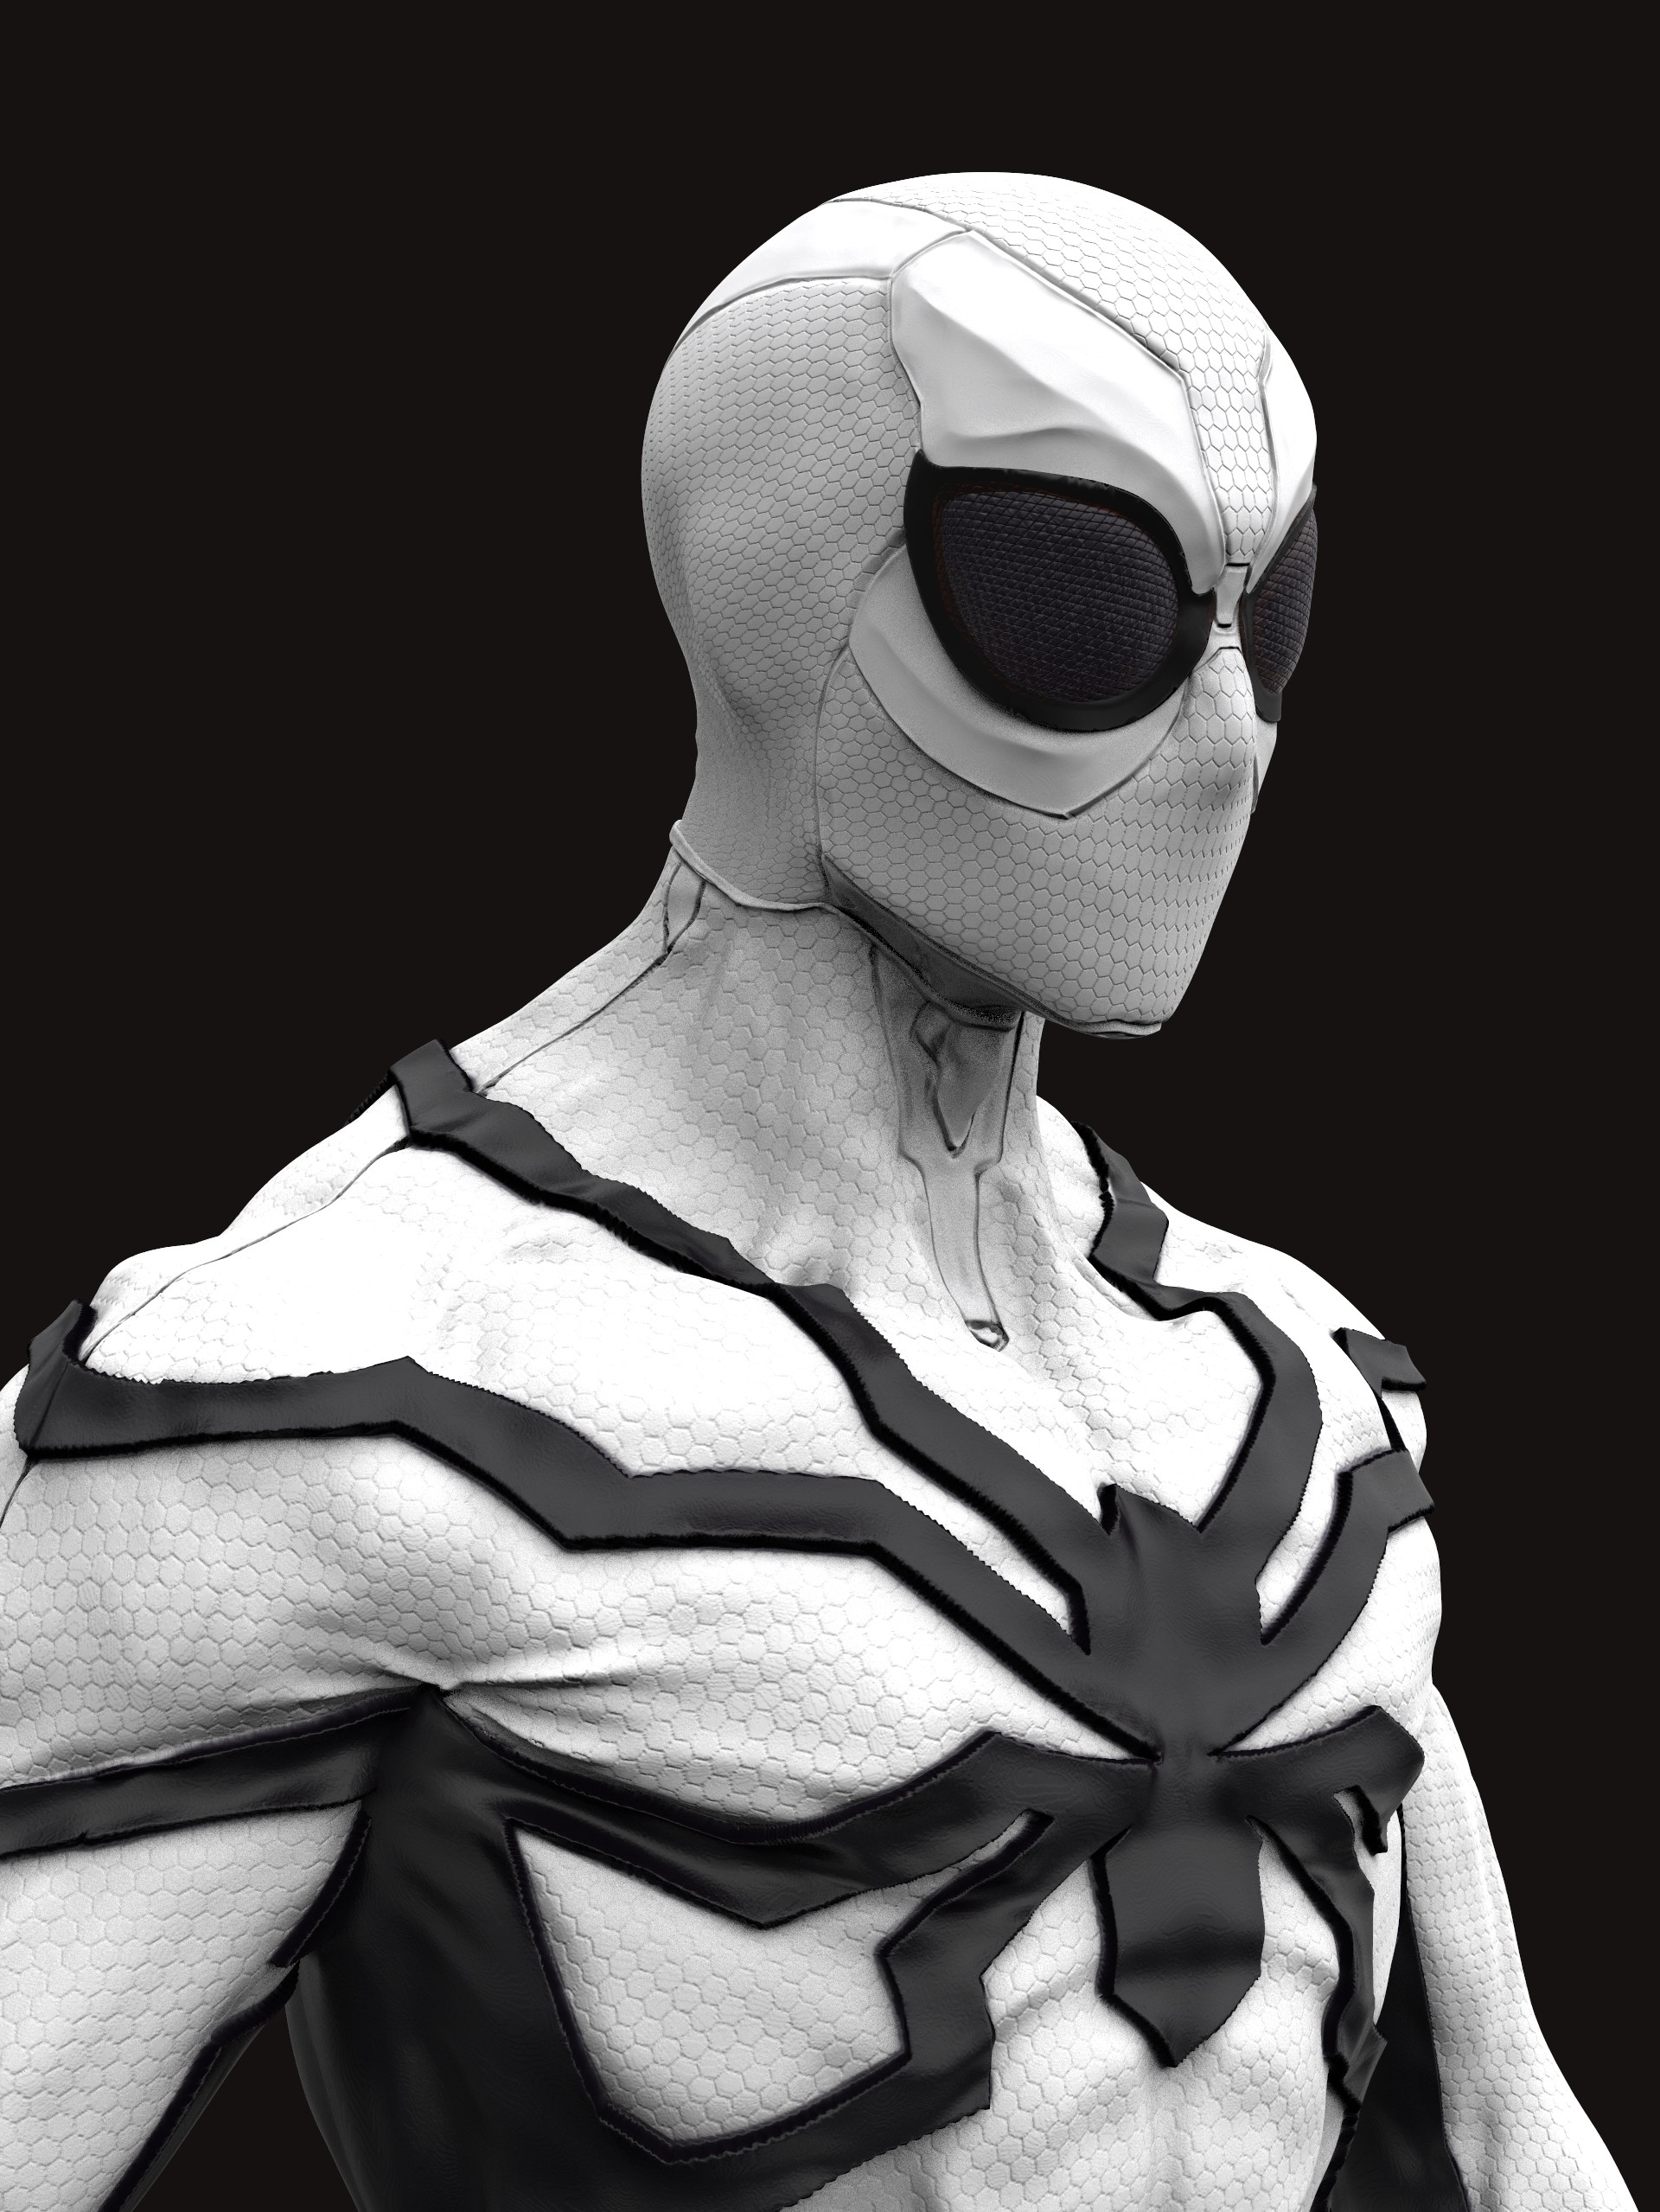 future spider man mask